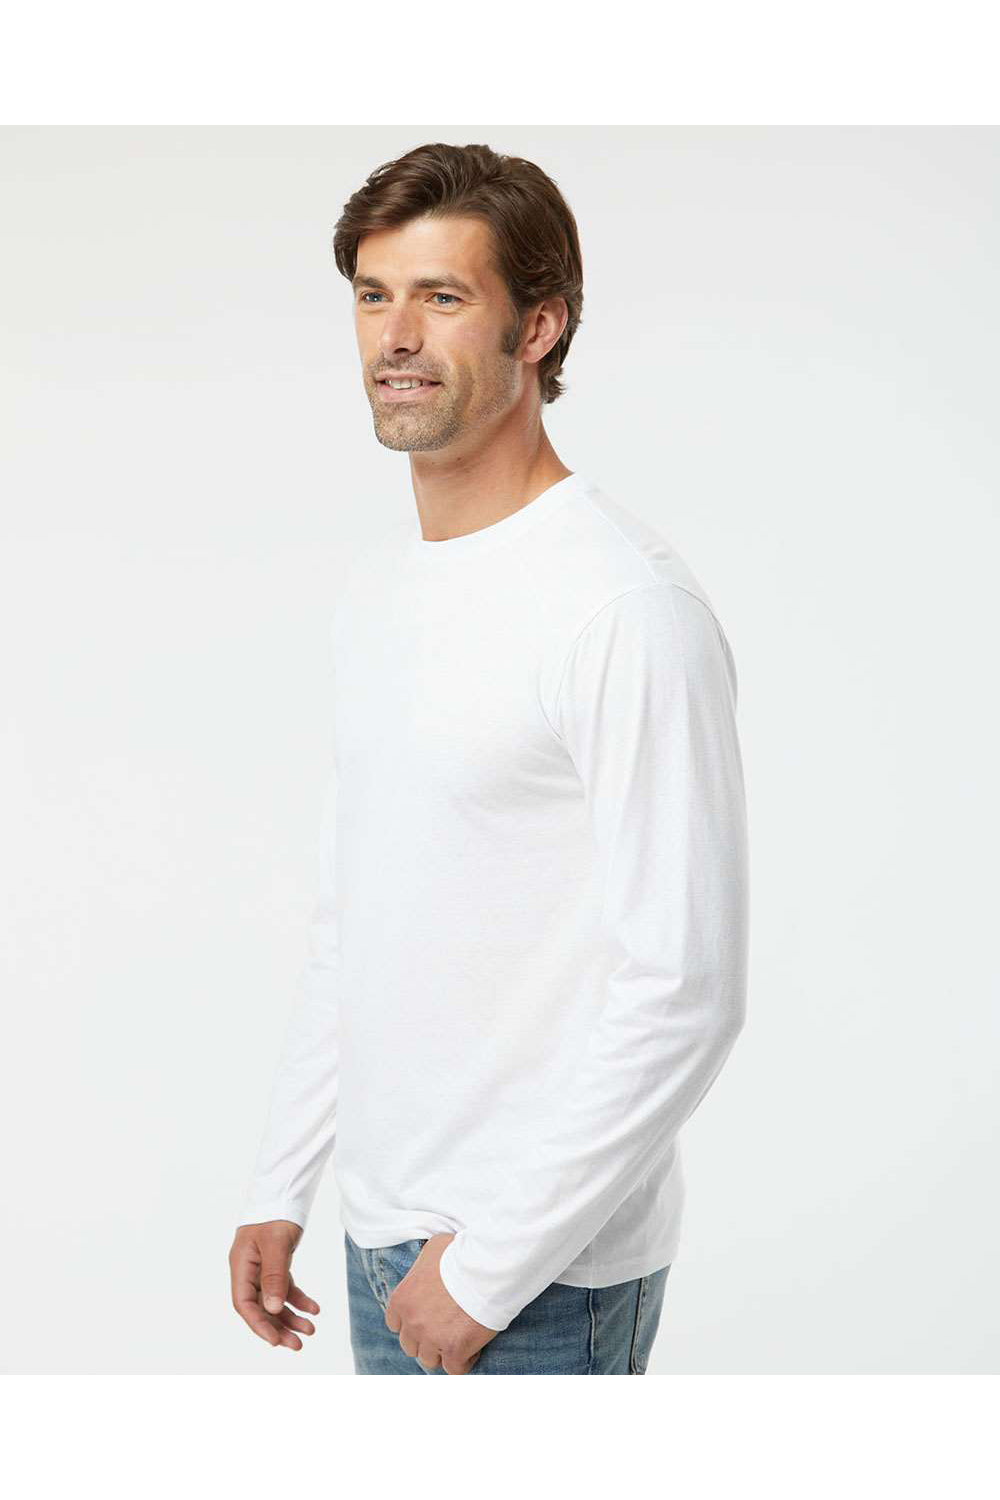 Kastlfel 2016 Mens RecycledSoft Long Sleeve Crewneck T-Shirt White Model Side